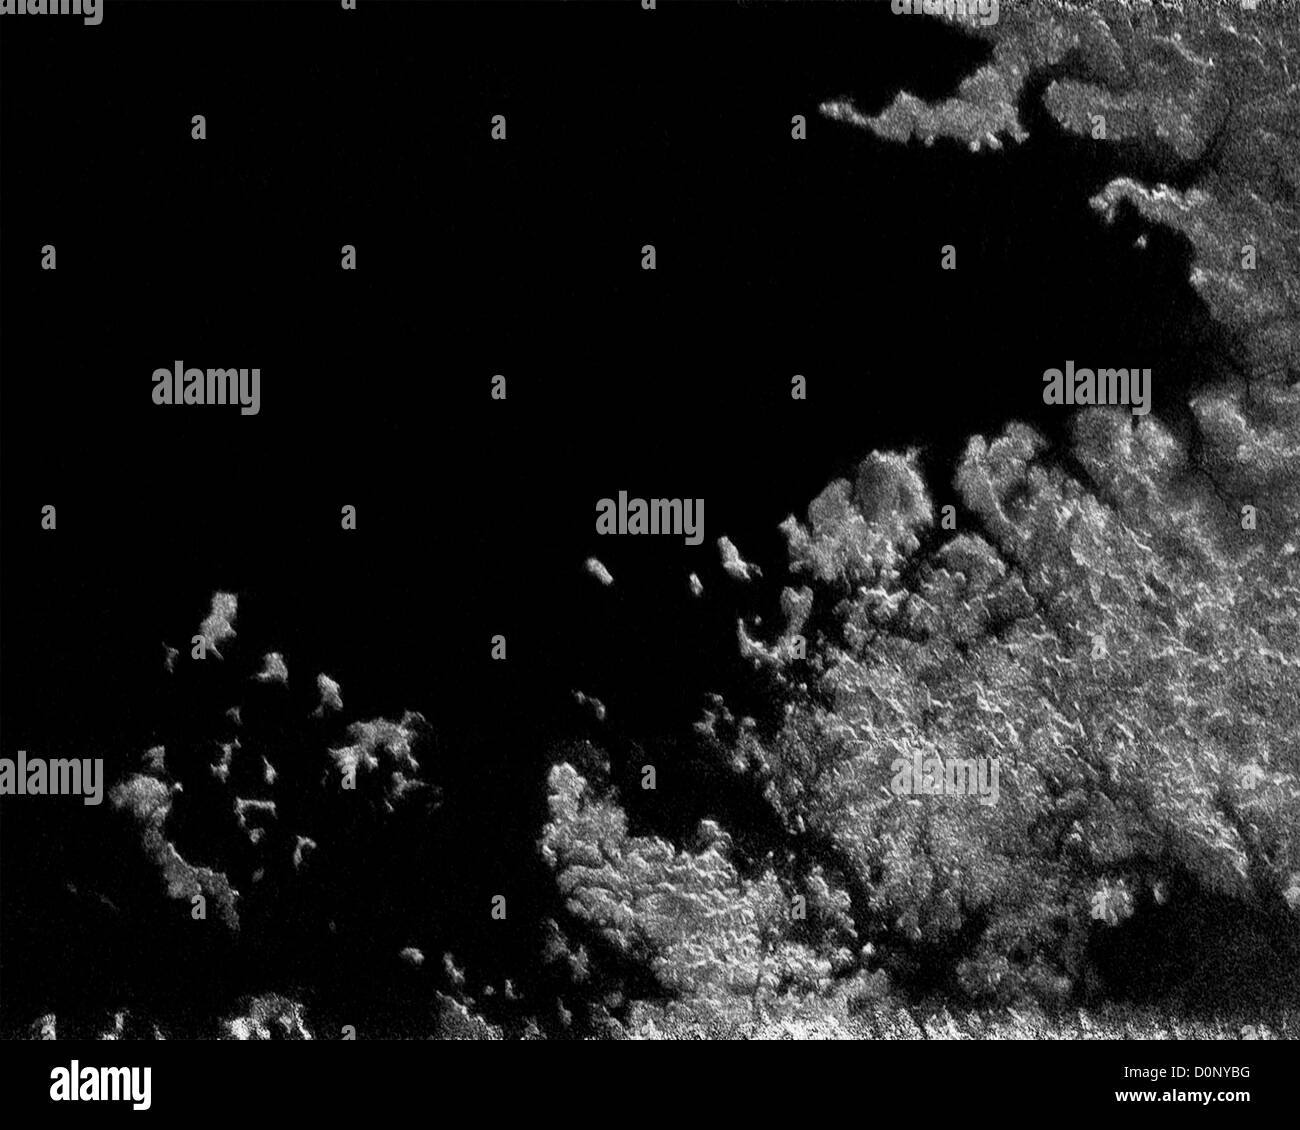 Saturn titan Black and White Stock Photos & Images - Alamy